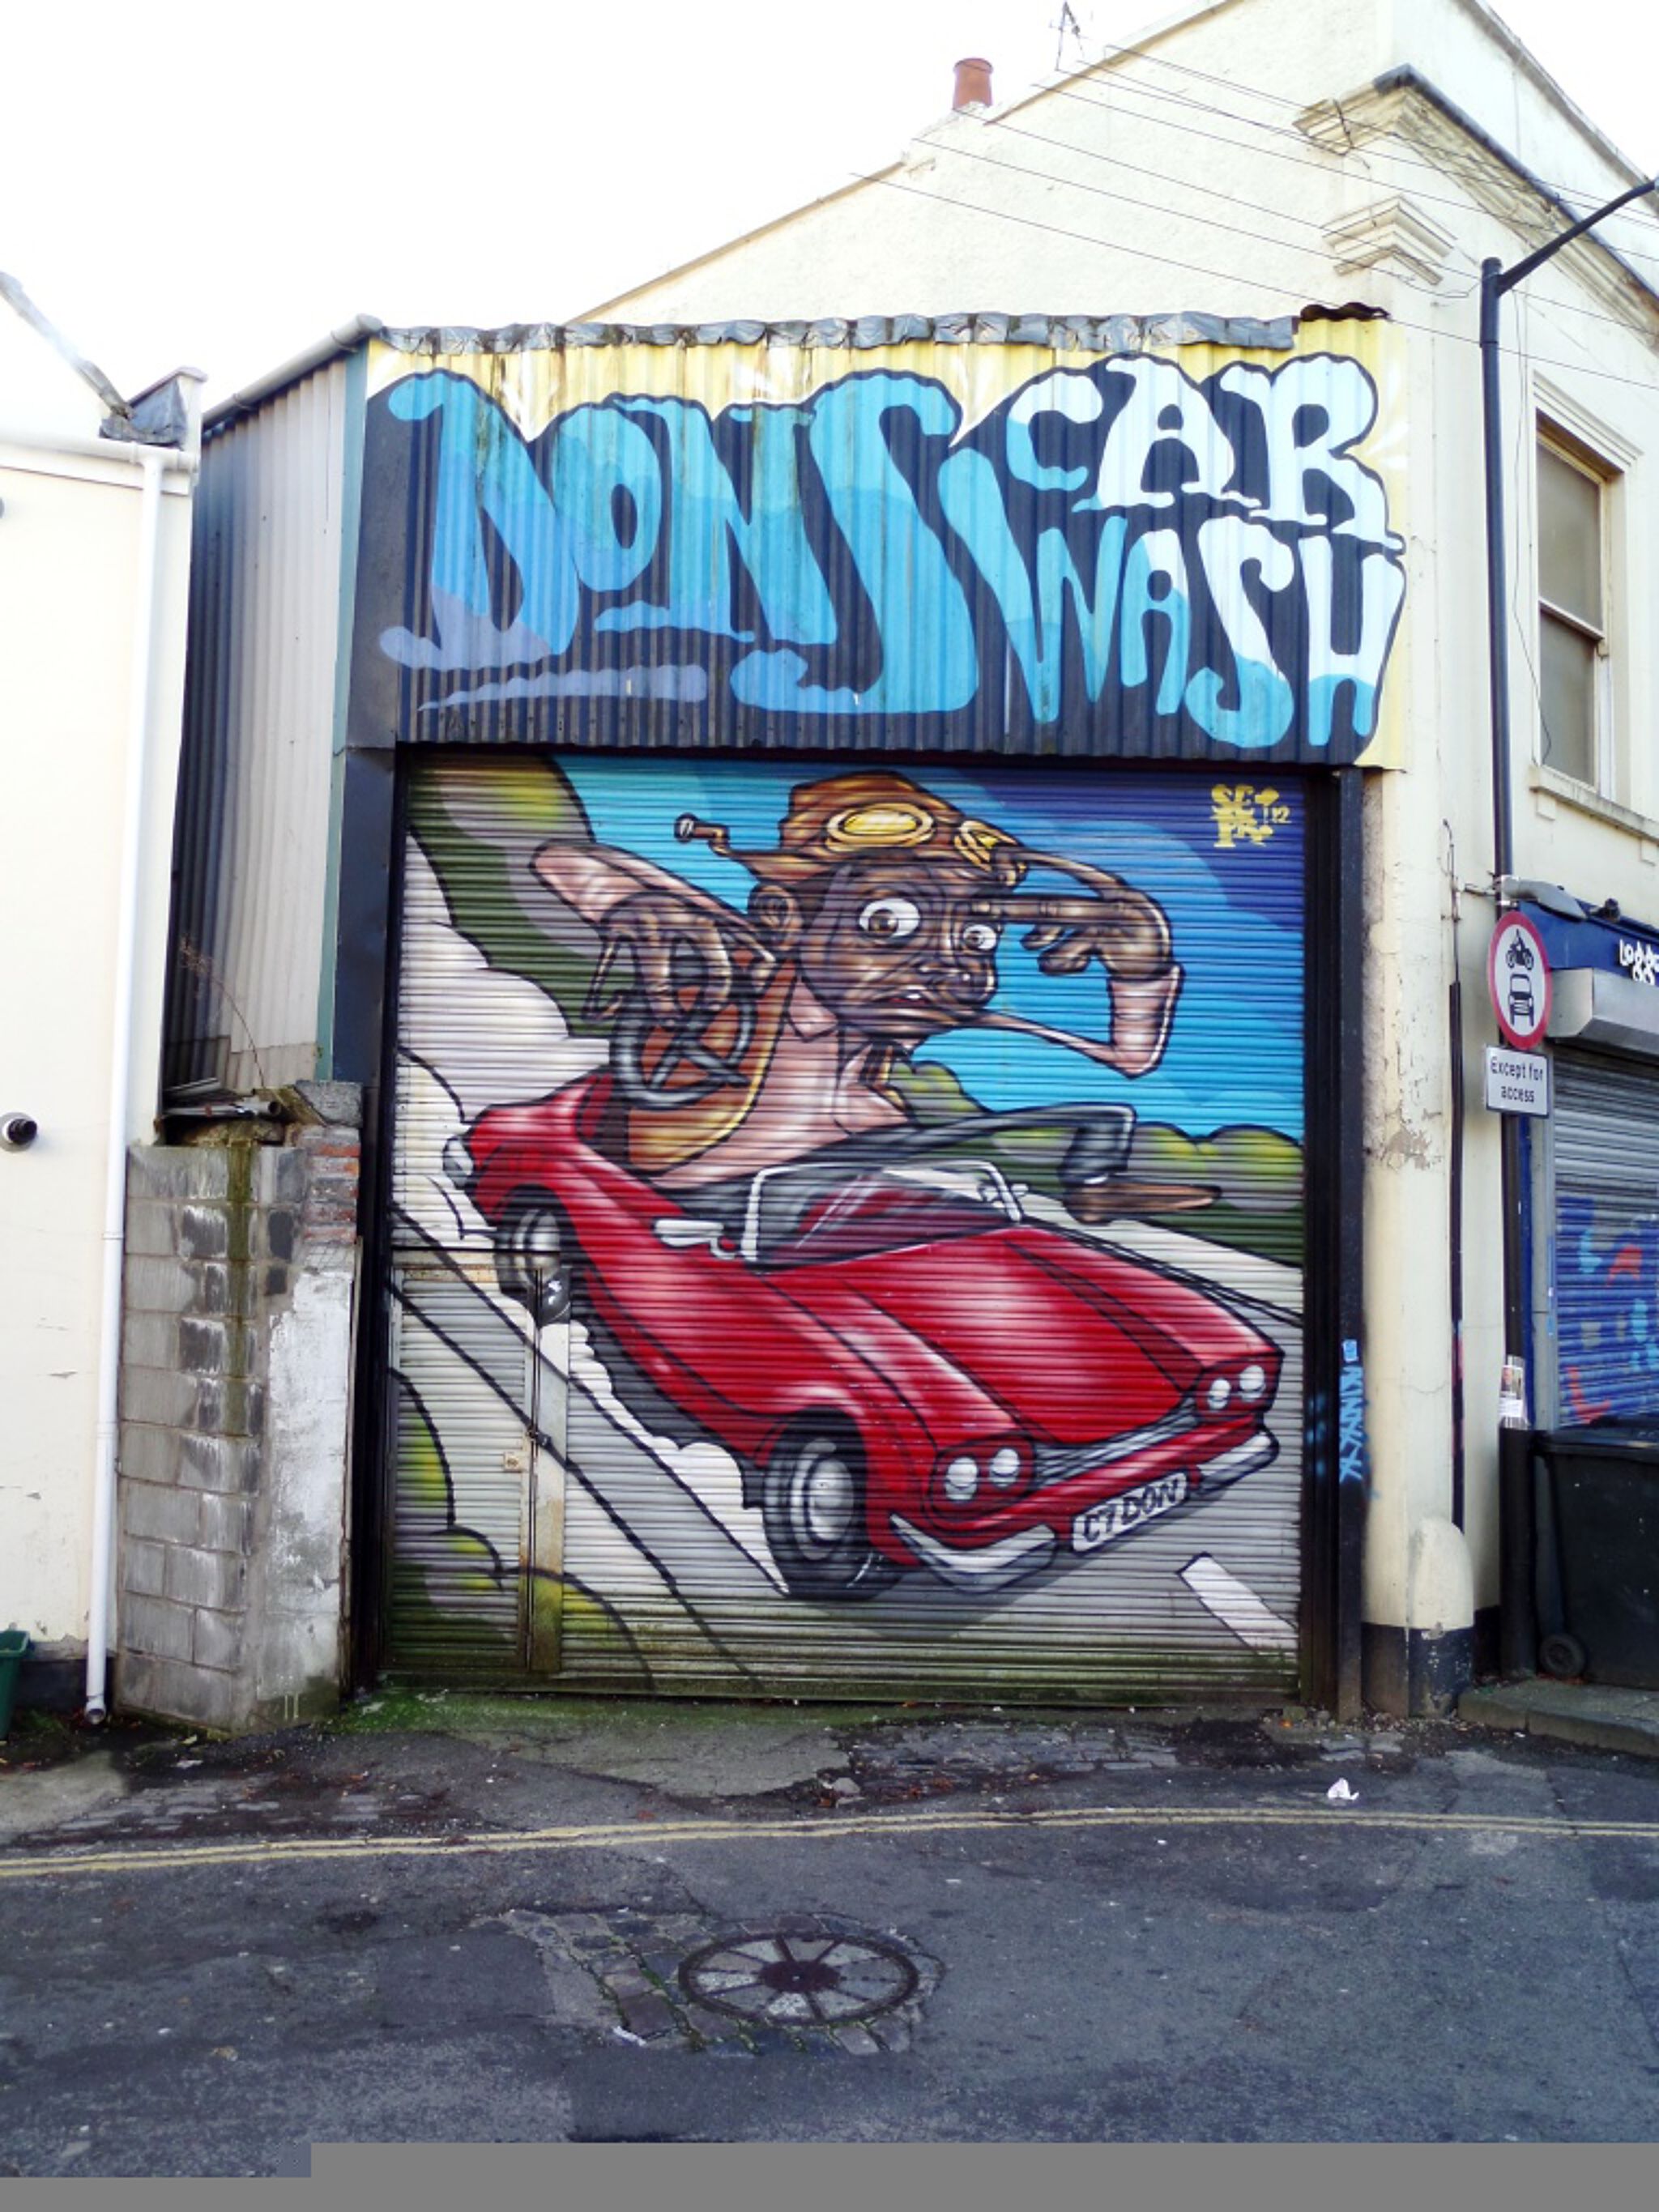 Sepr&mdash;Don's Car Wash